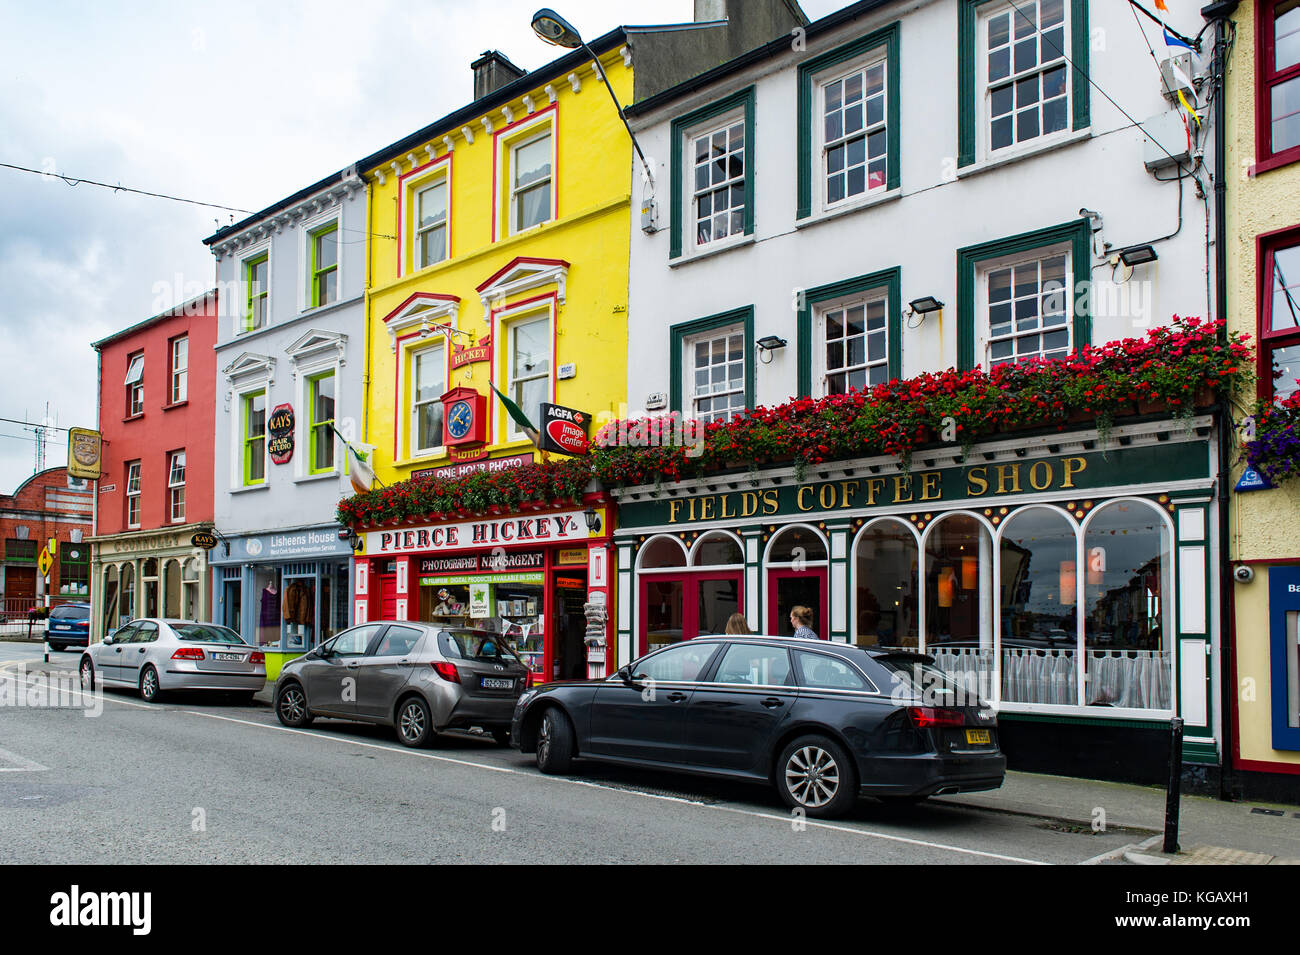 Skibbereen Main Street, Skibbereen, West Cork, Irlanda con campi Coffee Shop e Pierce Hickey giornalai. Foto Stock